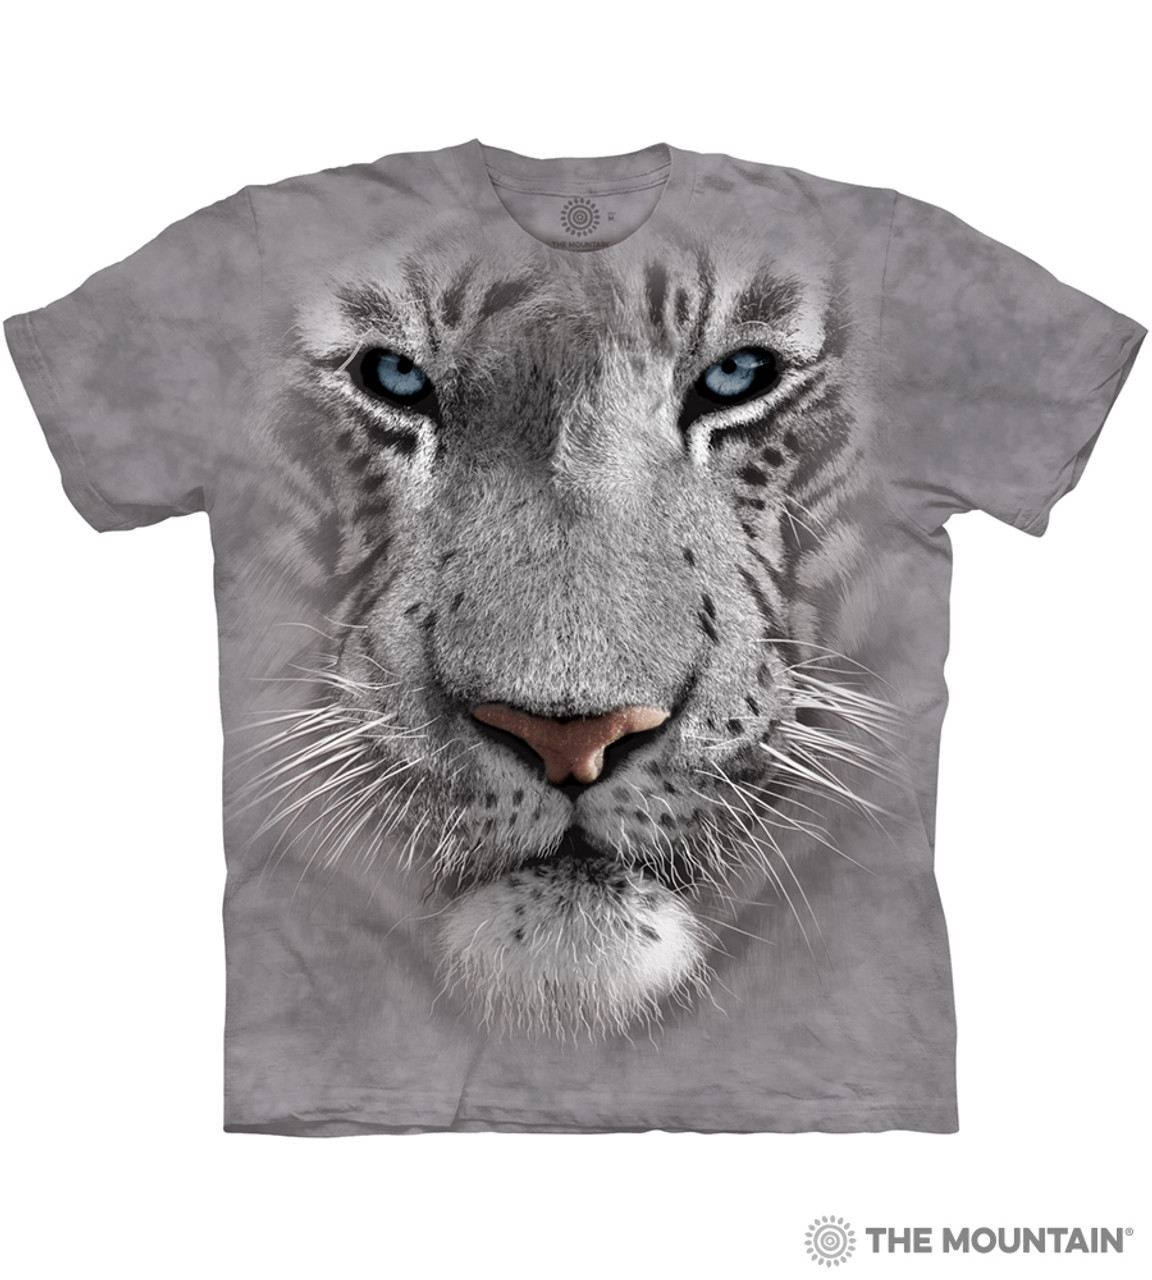 white tiger print shirt